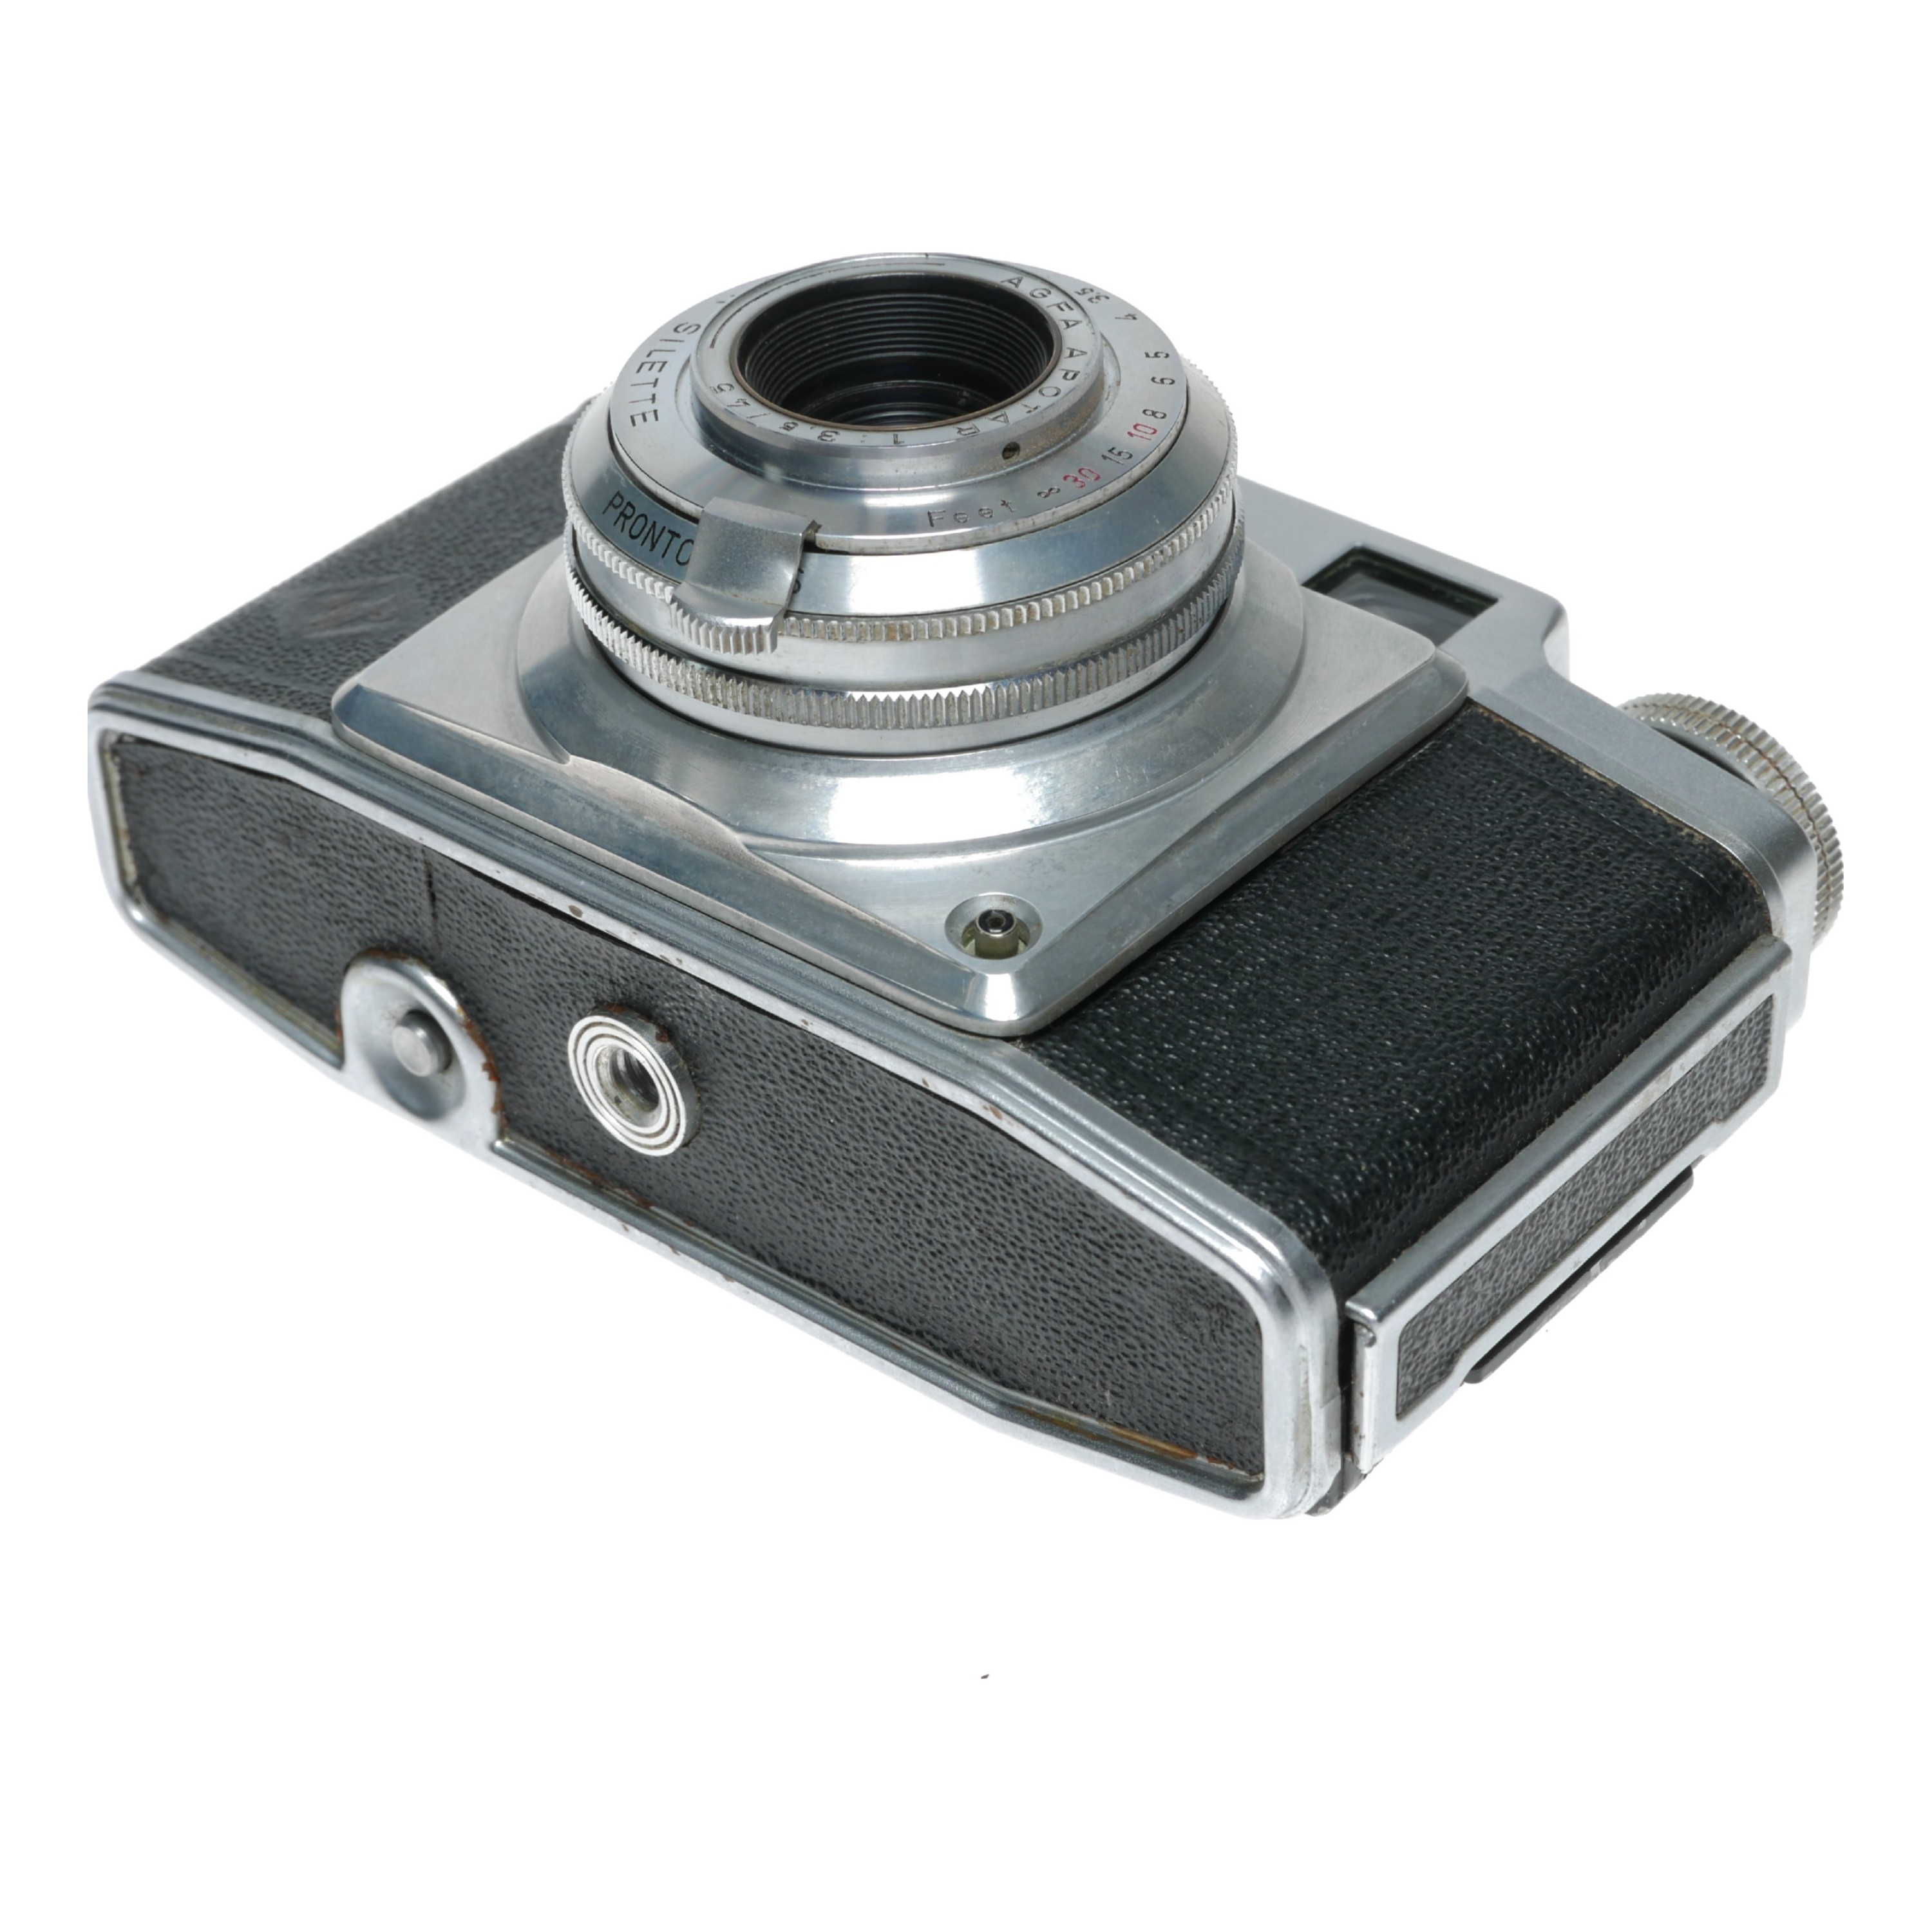 Agfa Agfa Super Silette 35mm Film Rangefinder Camera Apotar 1:3.5/45 For Parts Read 